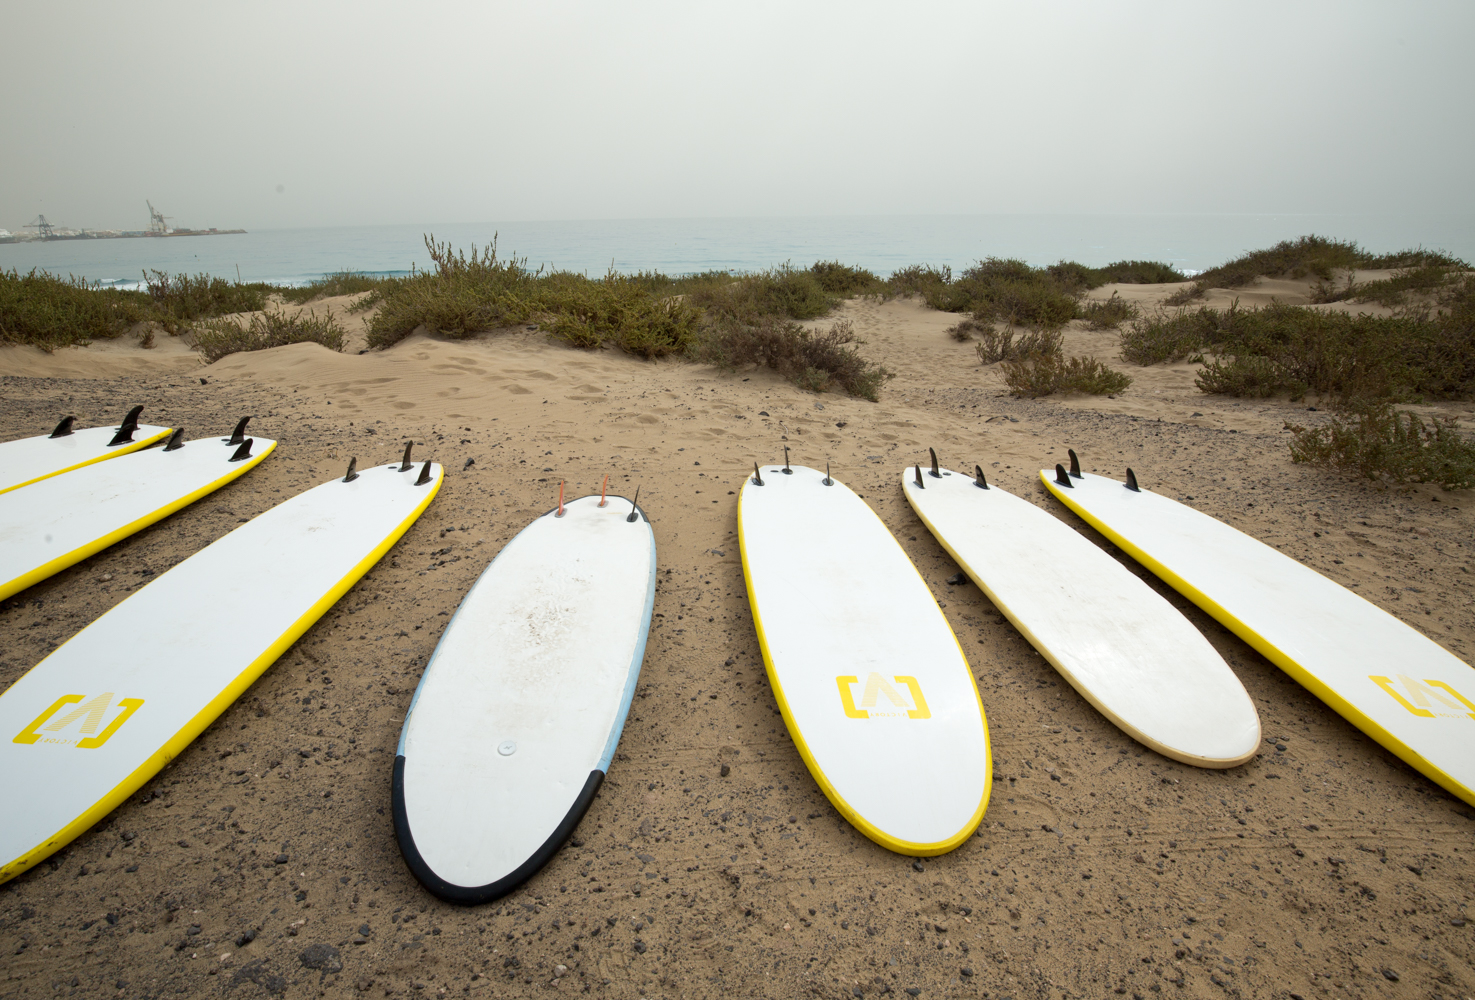 foamie surf boards on the beach